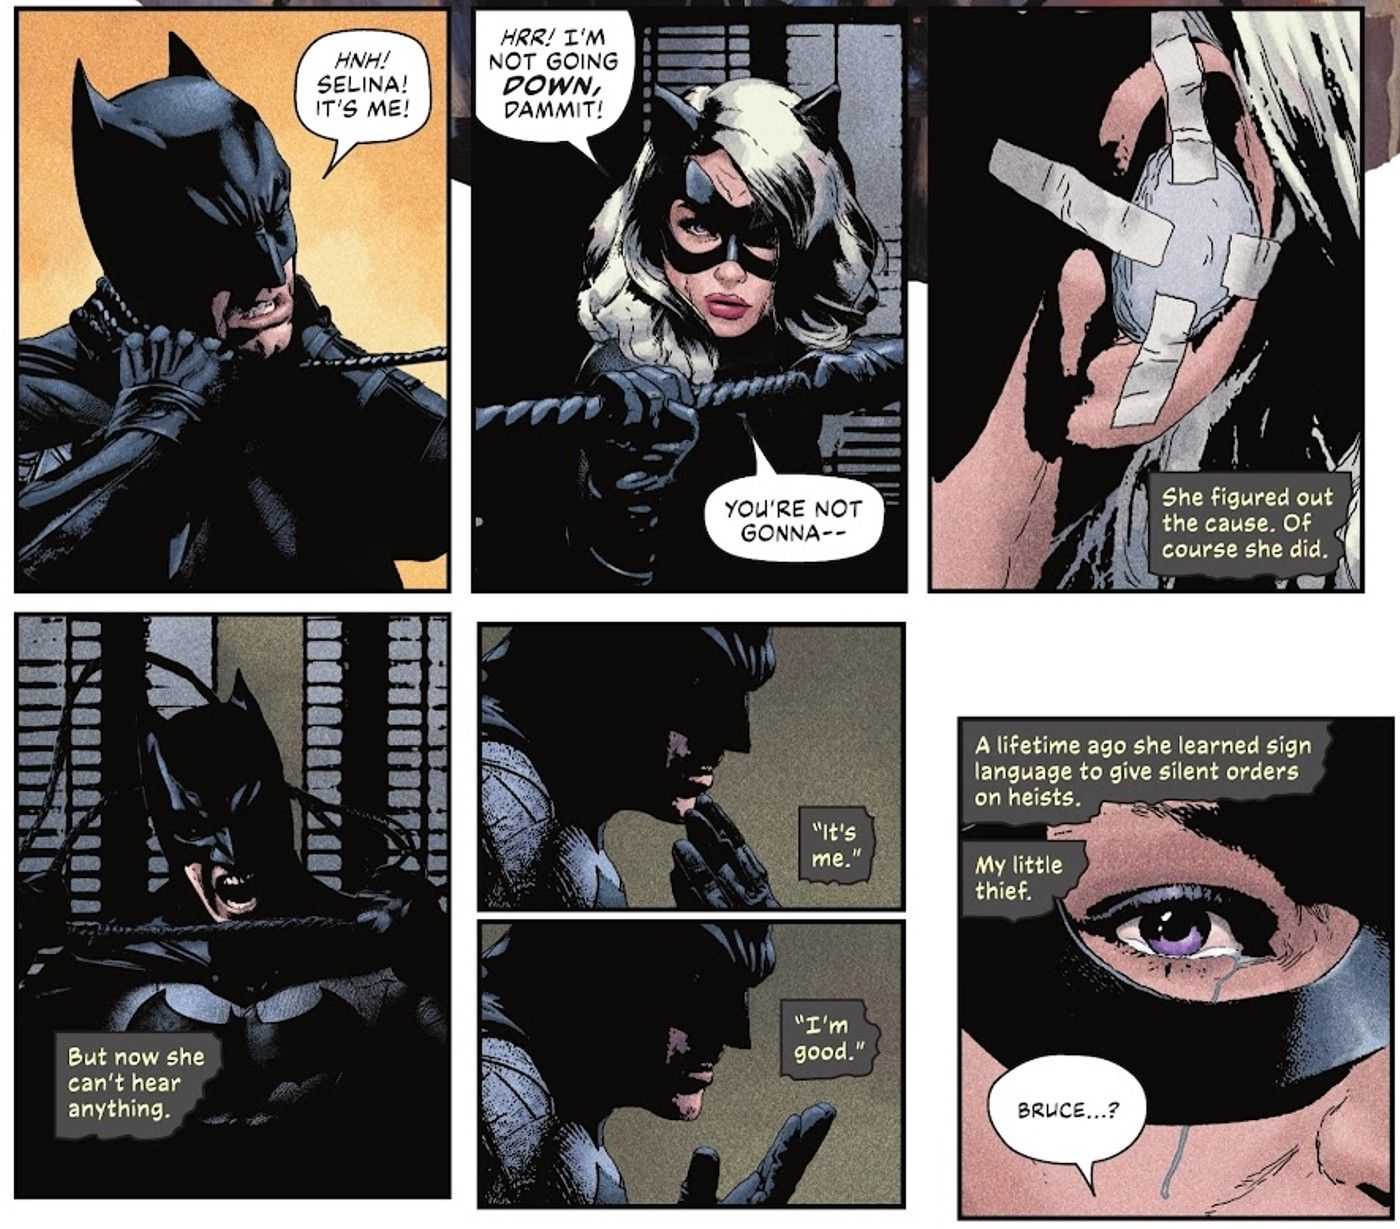 Comic book panels: Batman and Catwoman communicate using sign language.